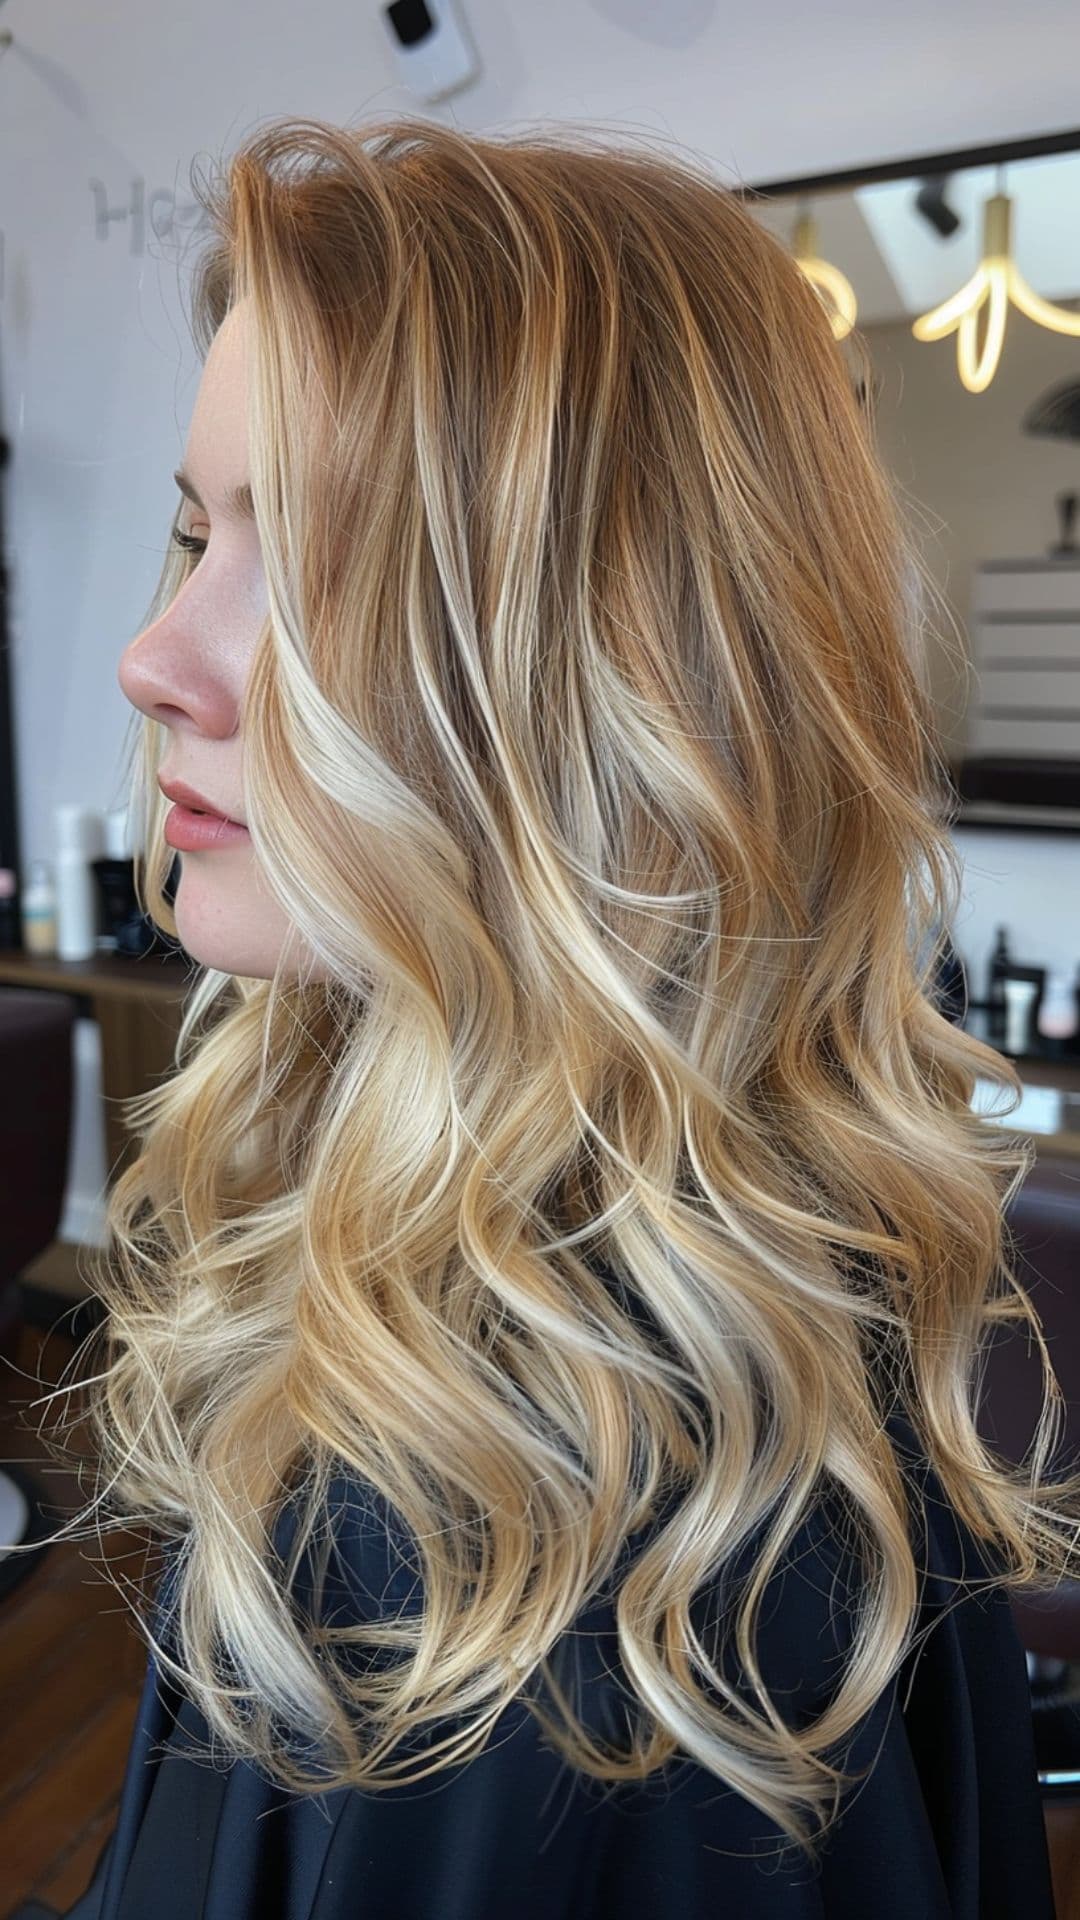 A woman modelling a warm honey blonde hair.